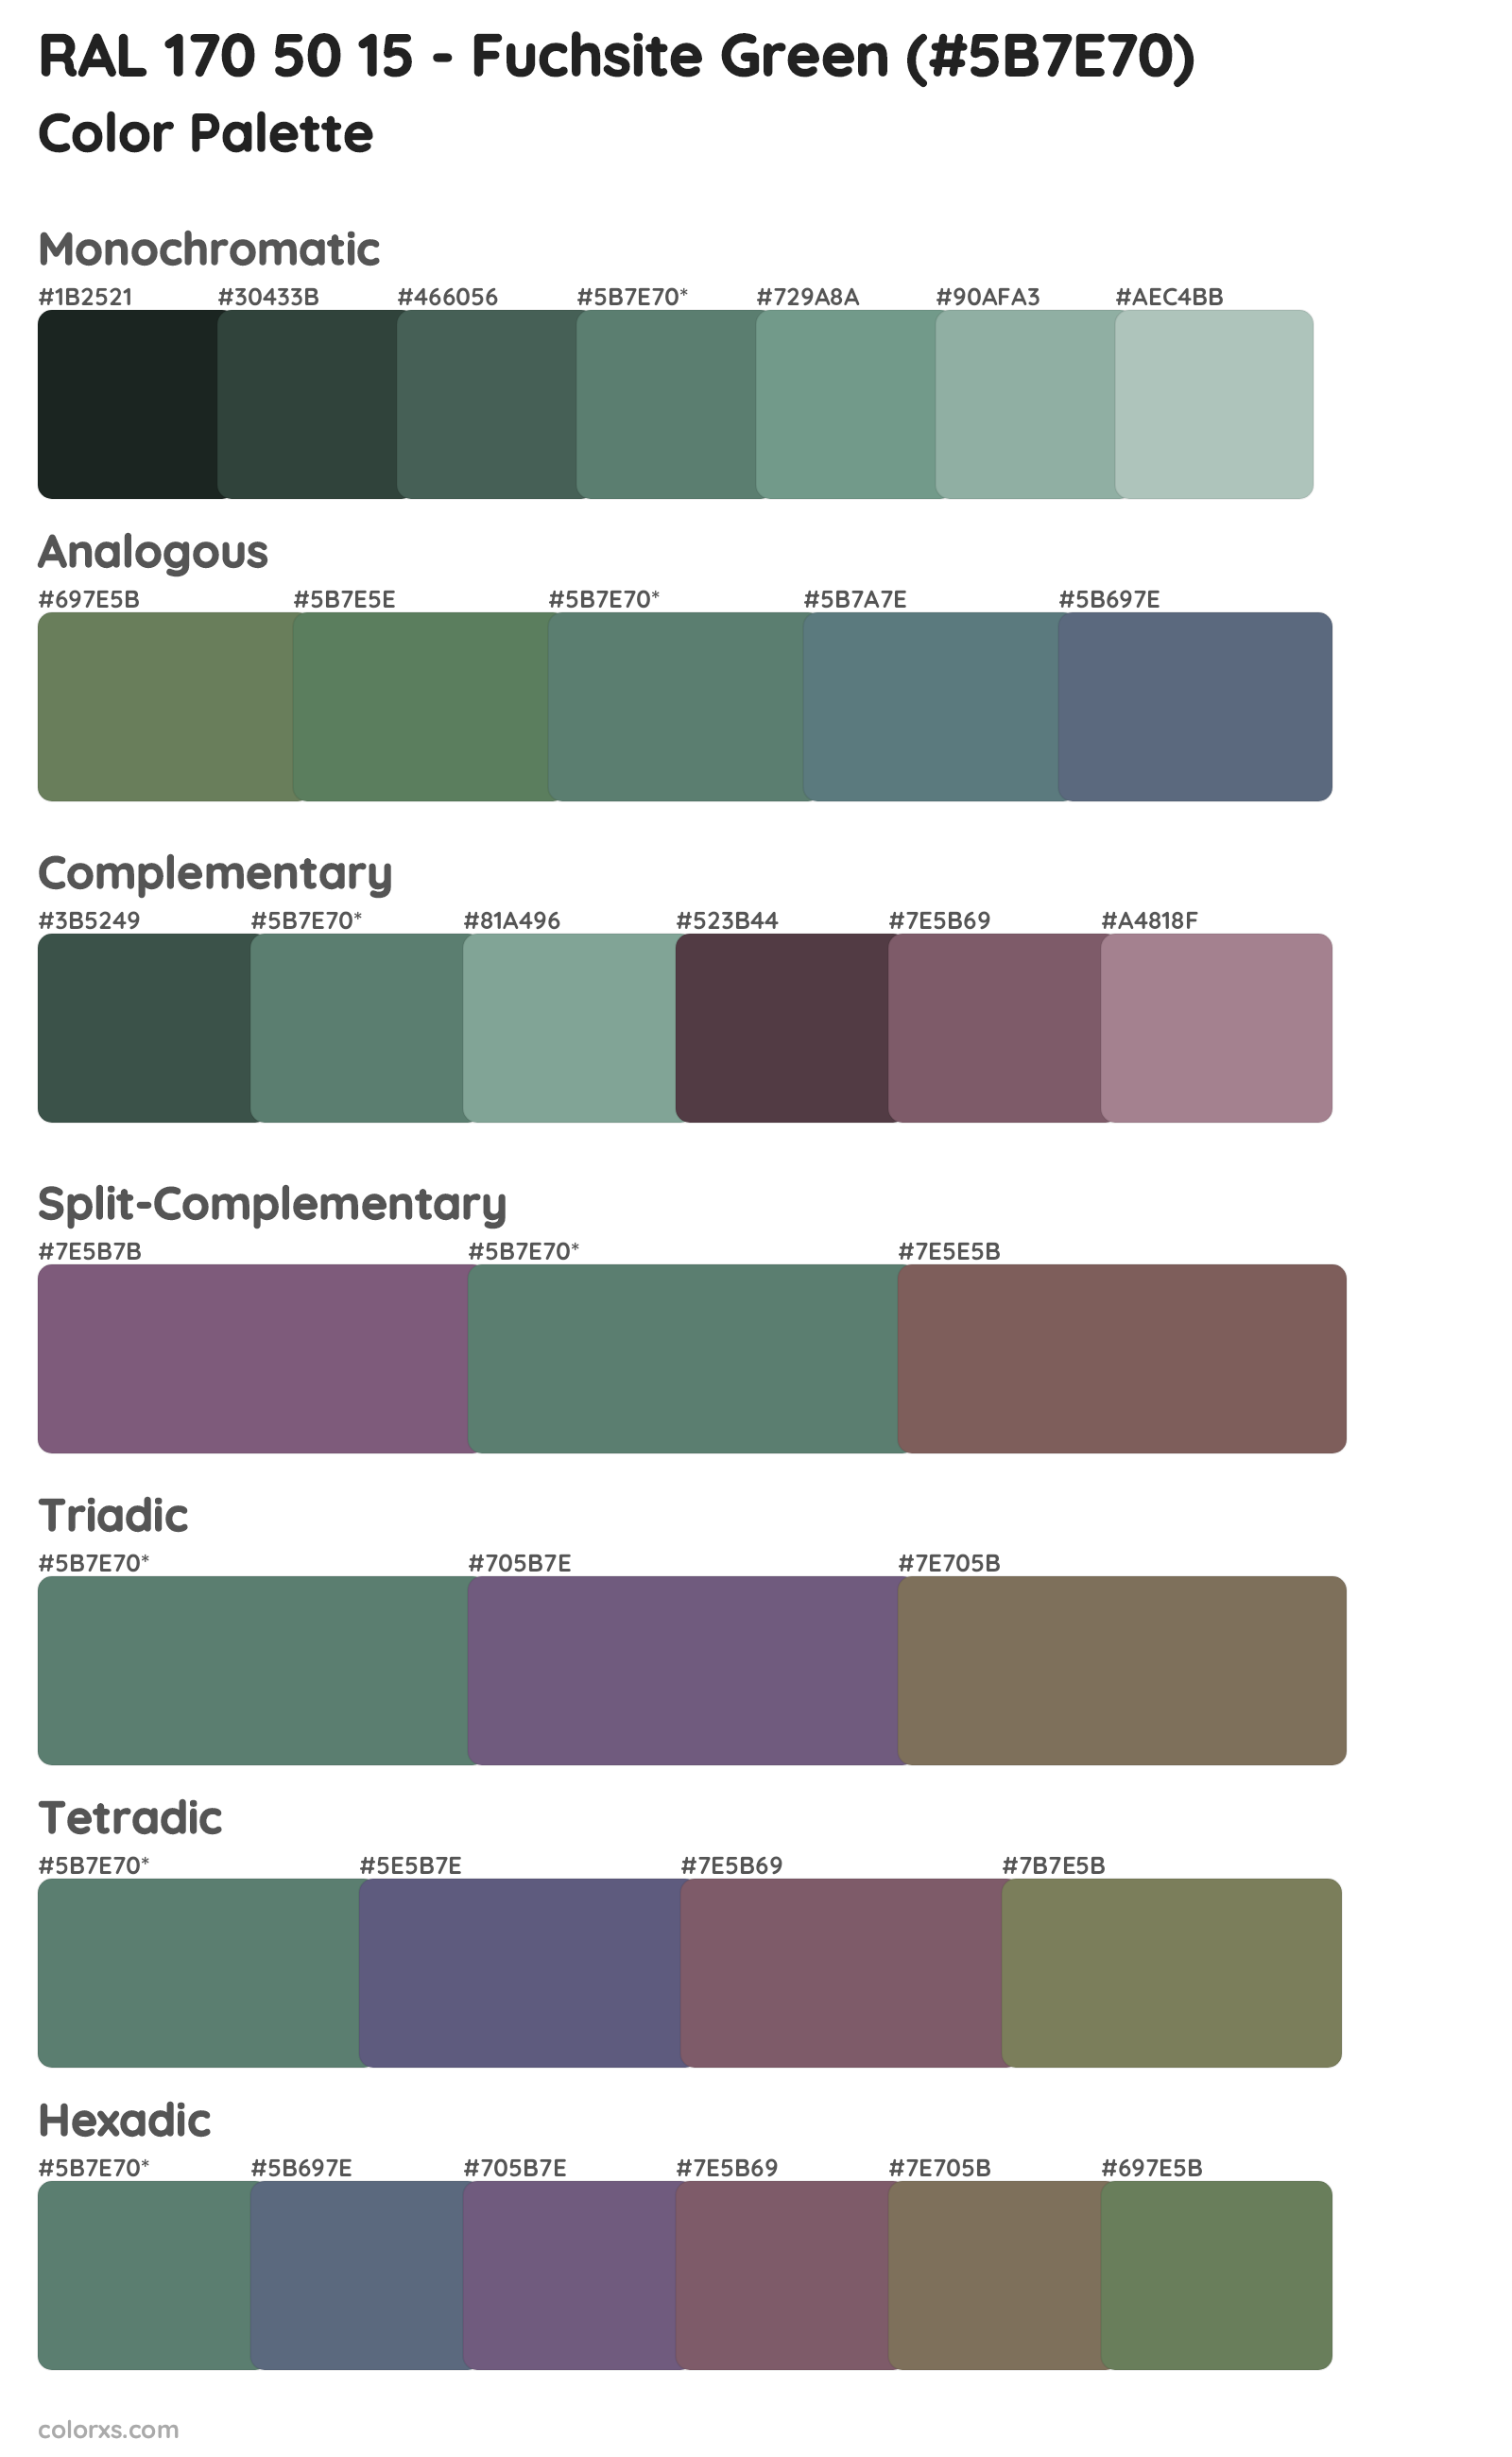 RAL 170 50 15 - Fuchsite Green Color Scheme Palettes